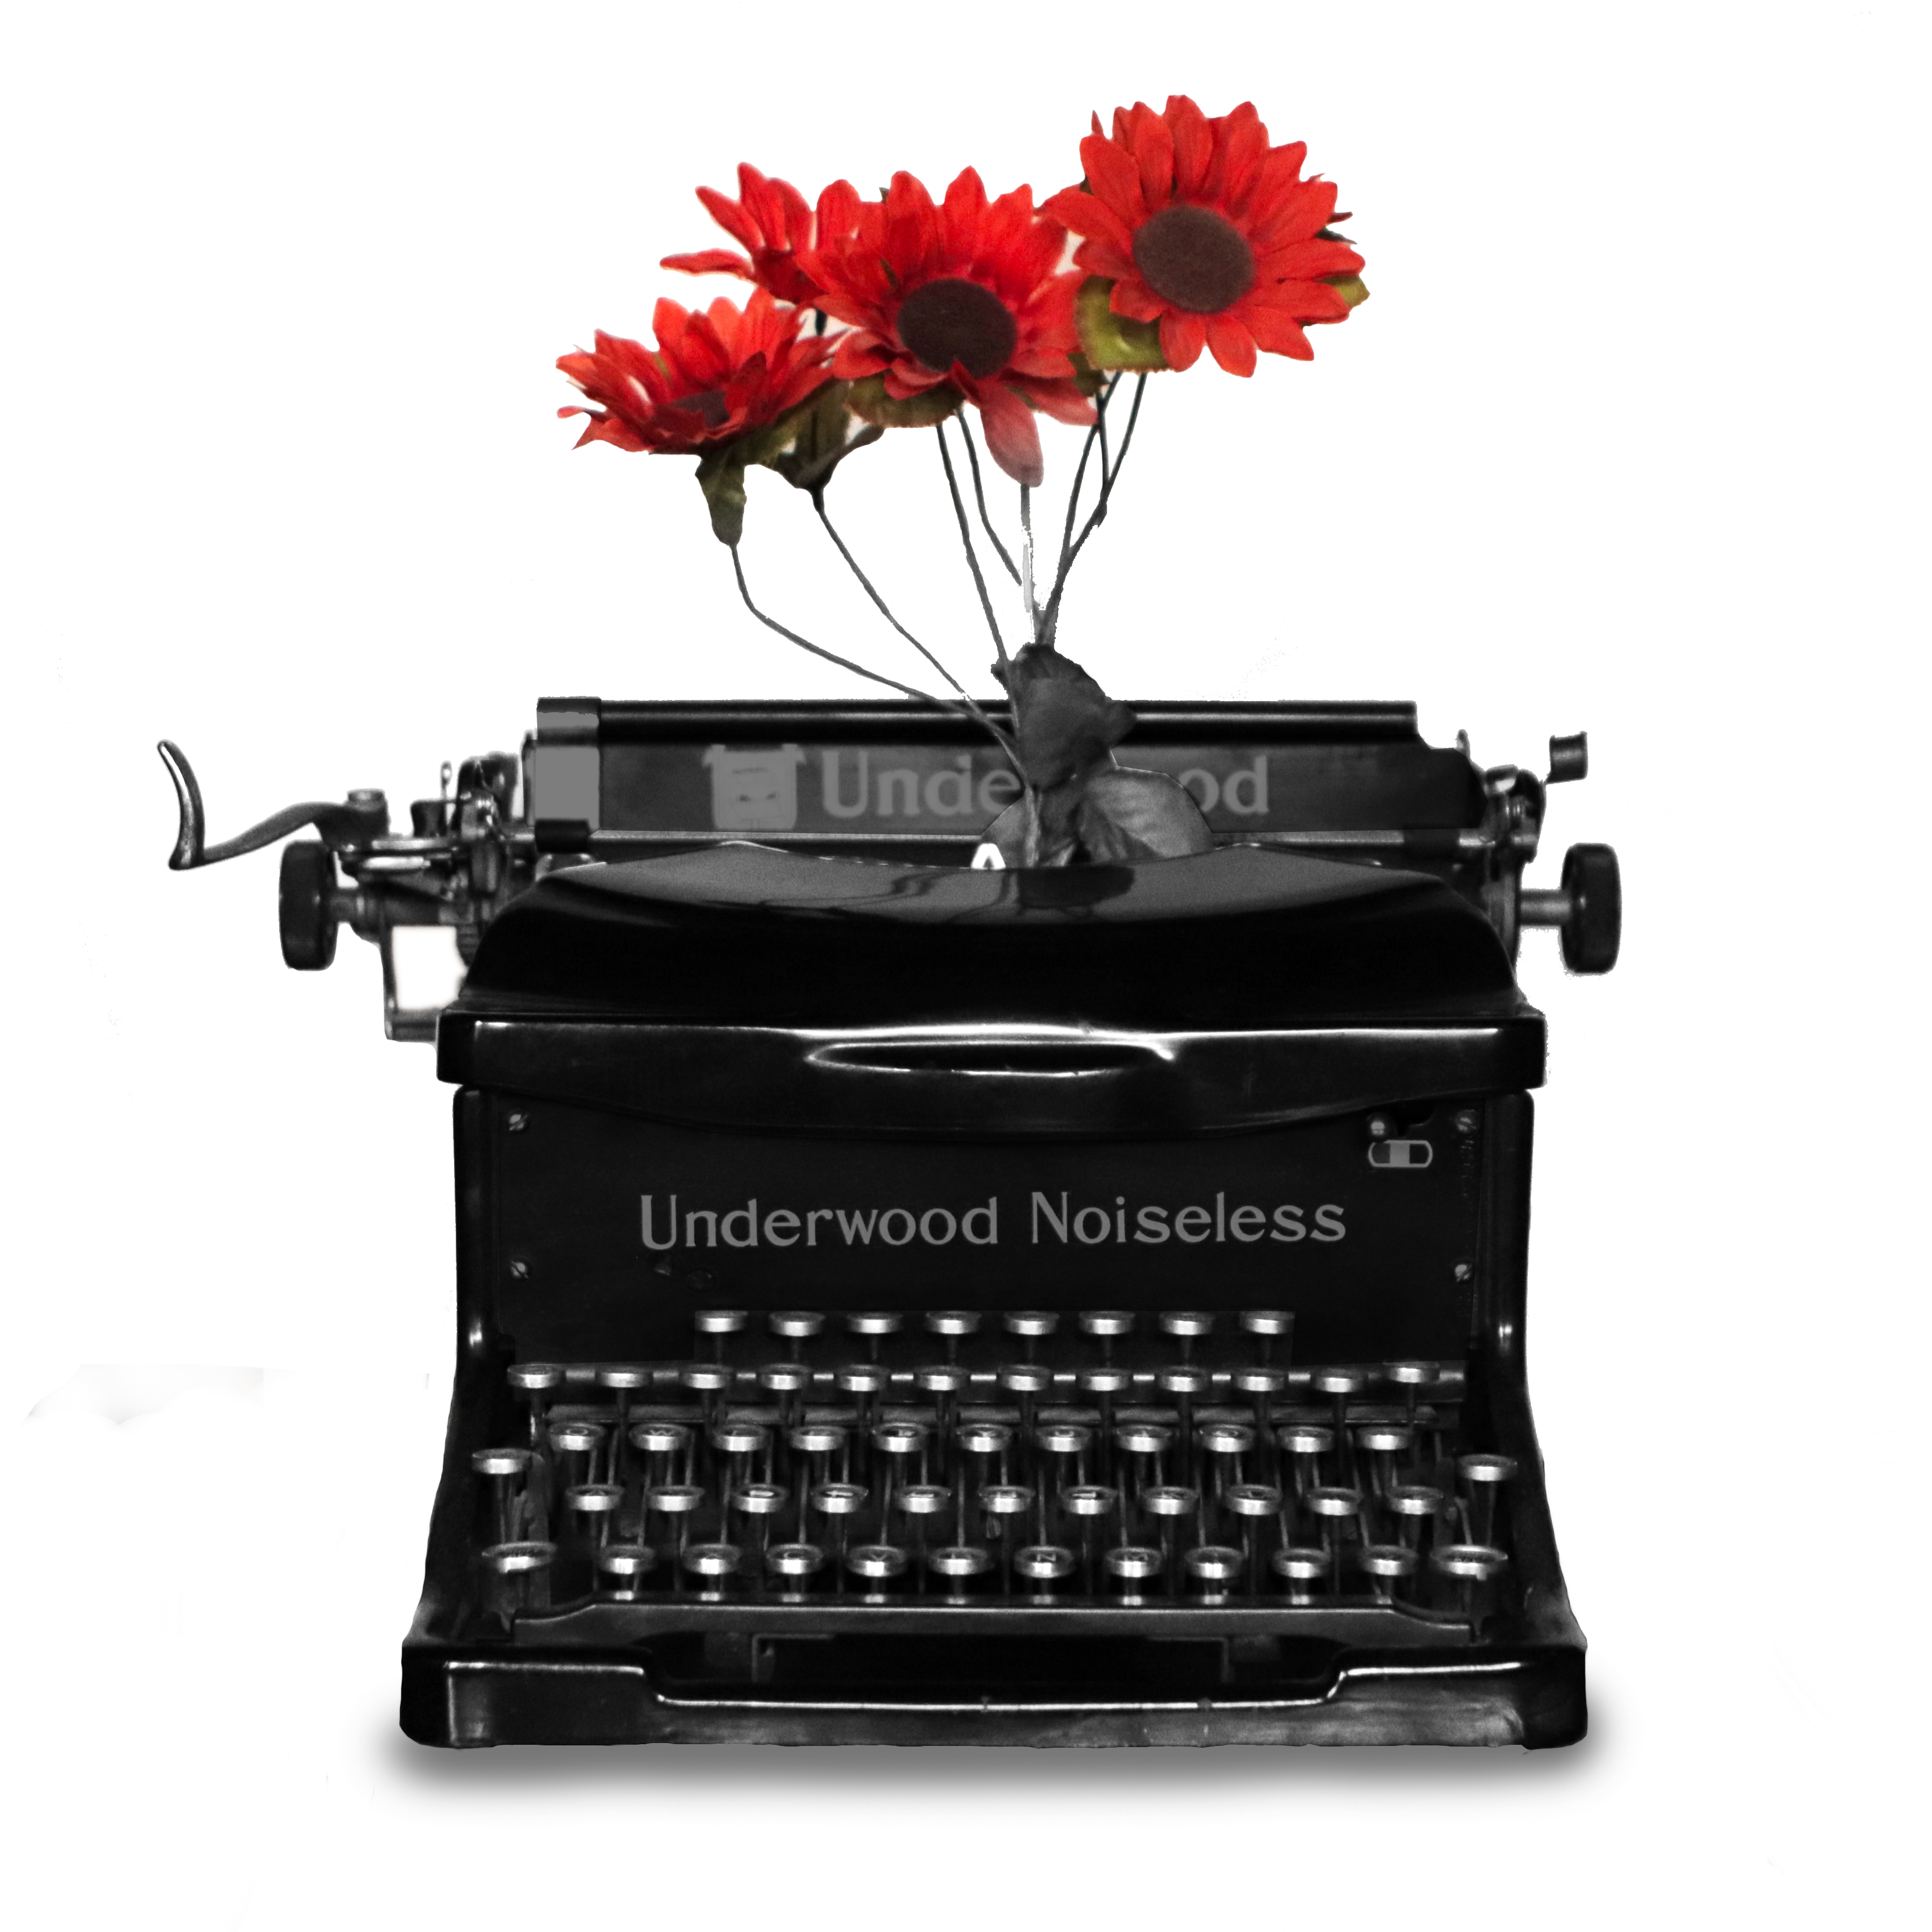 vintage typewriter with red plastic flowers